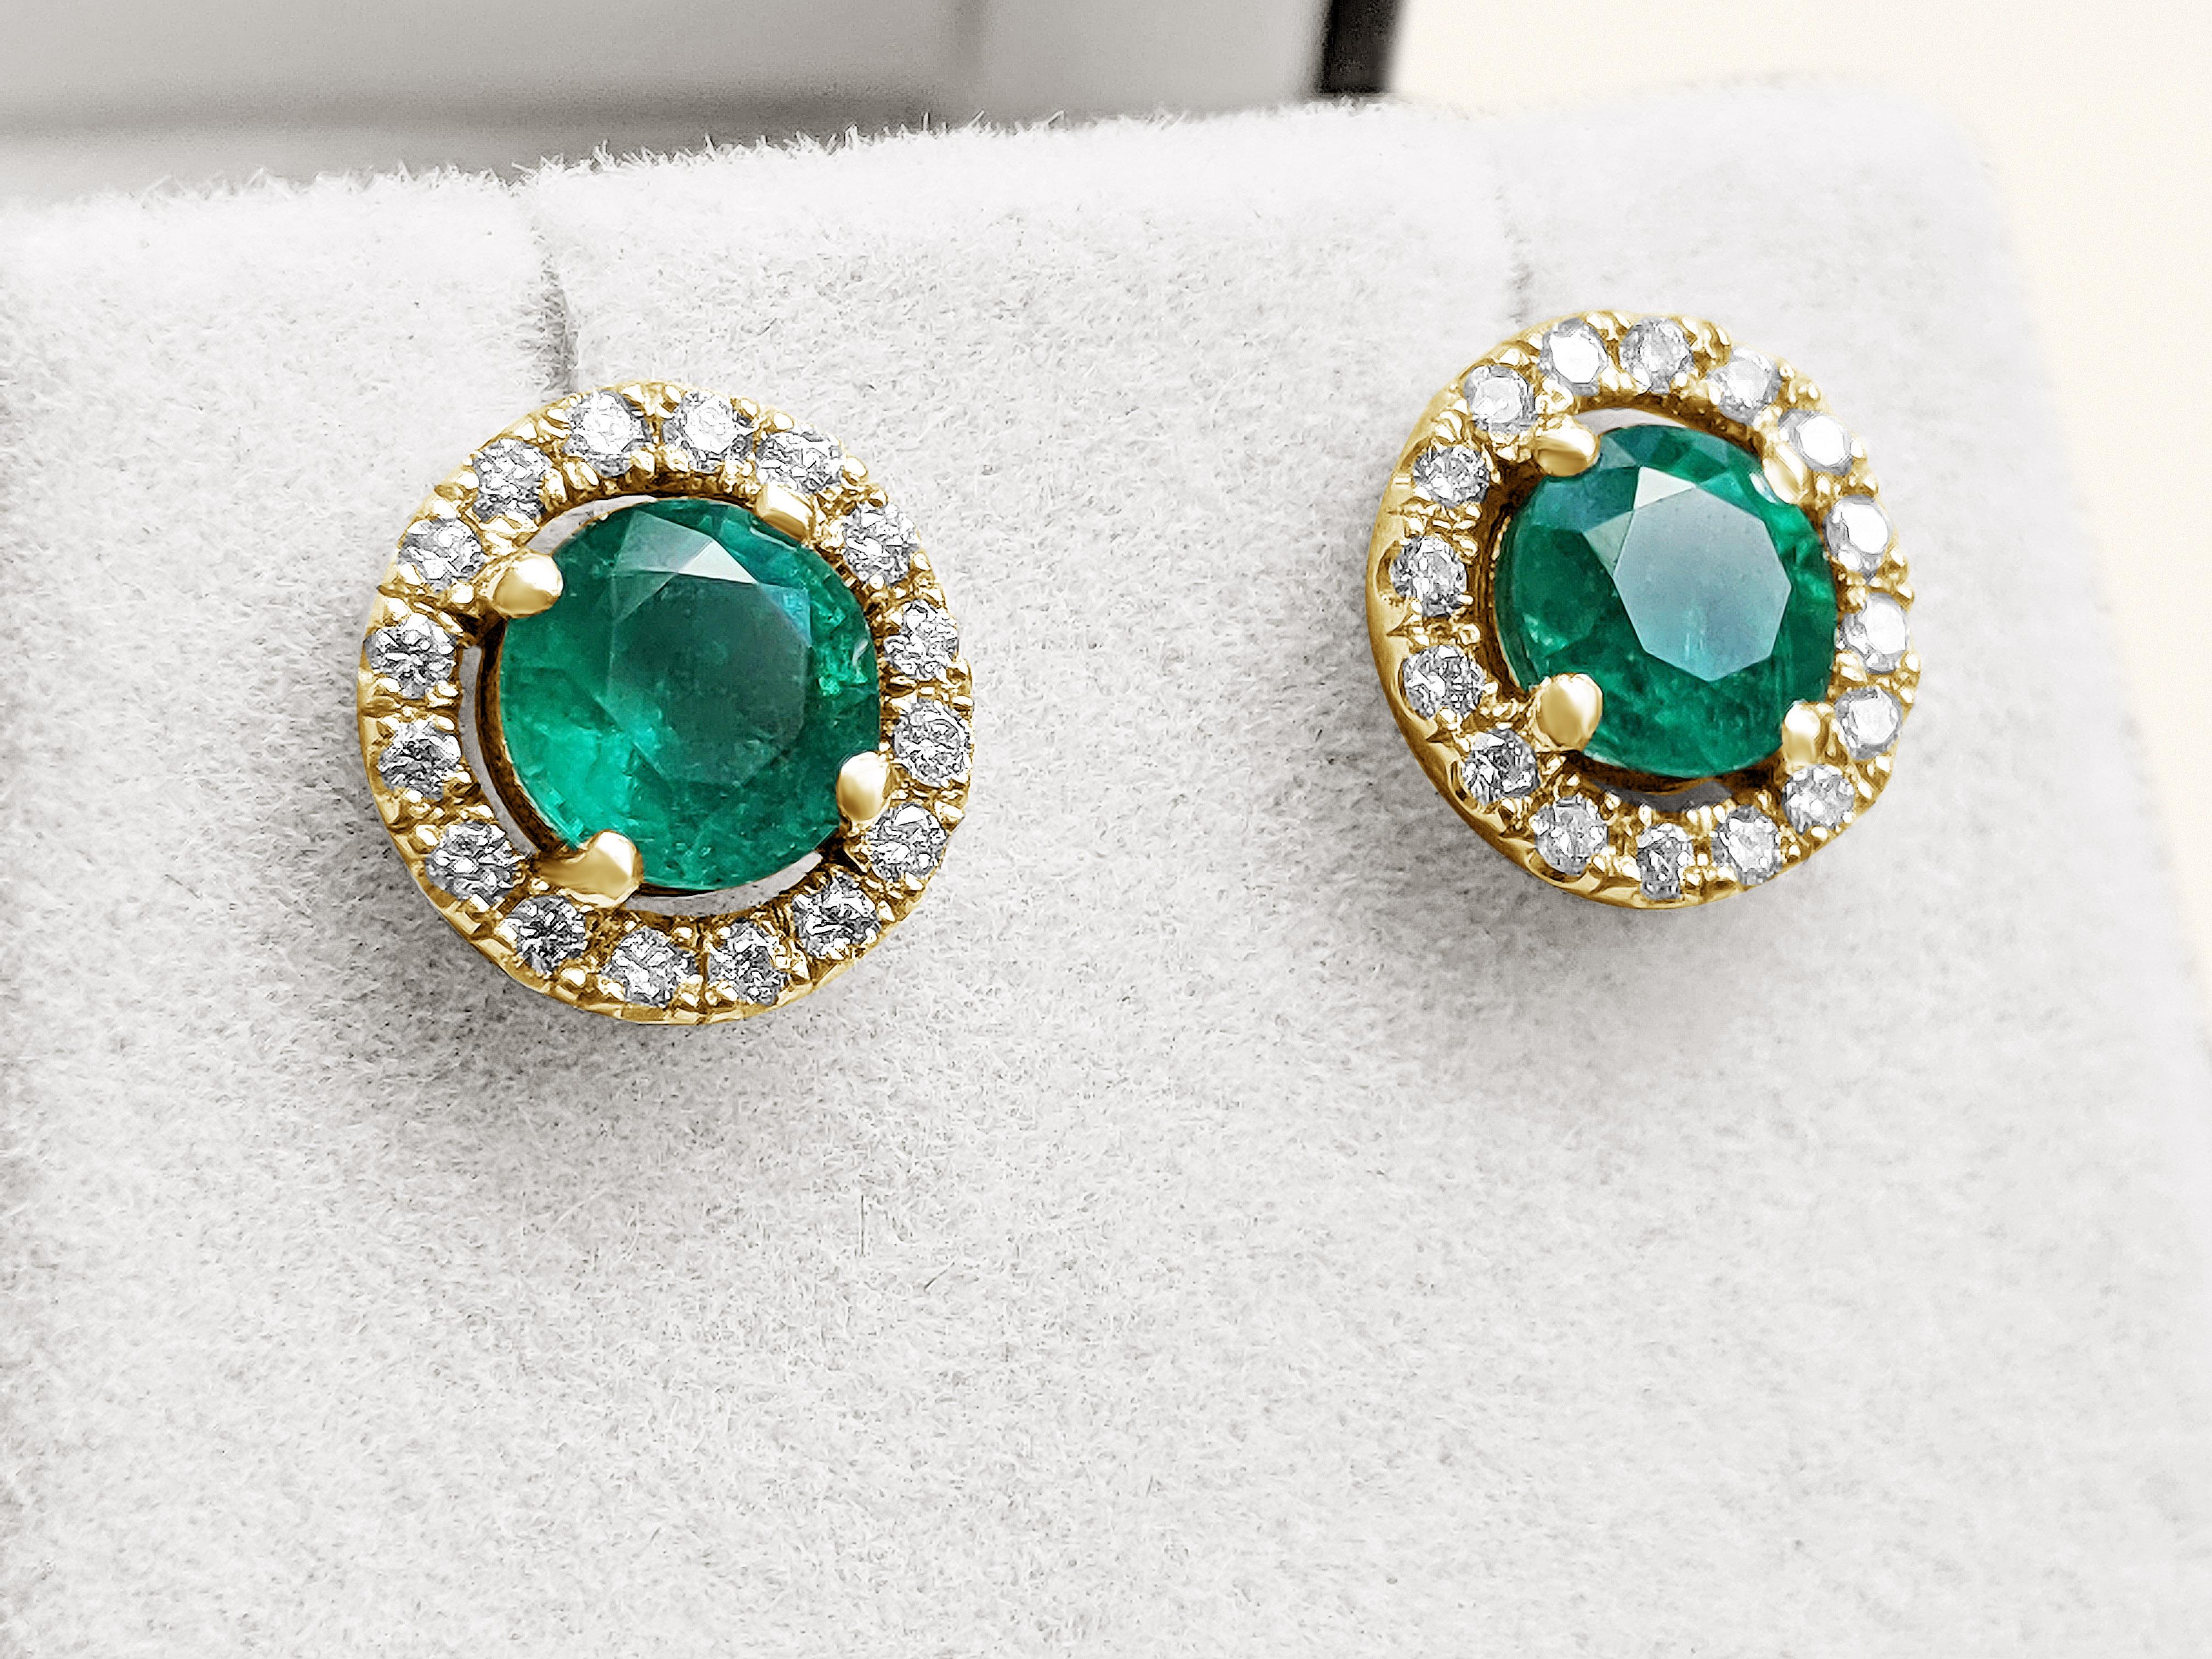 Round Cut 2.52 Carat Emerald and Diamonds Earrings